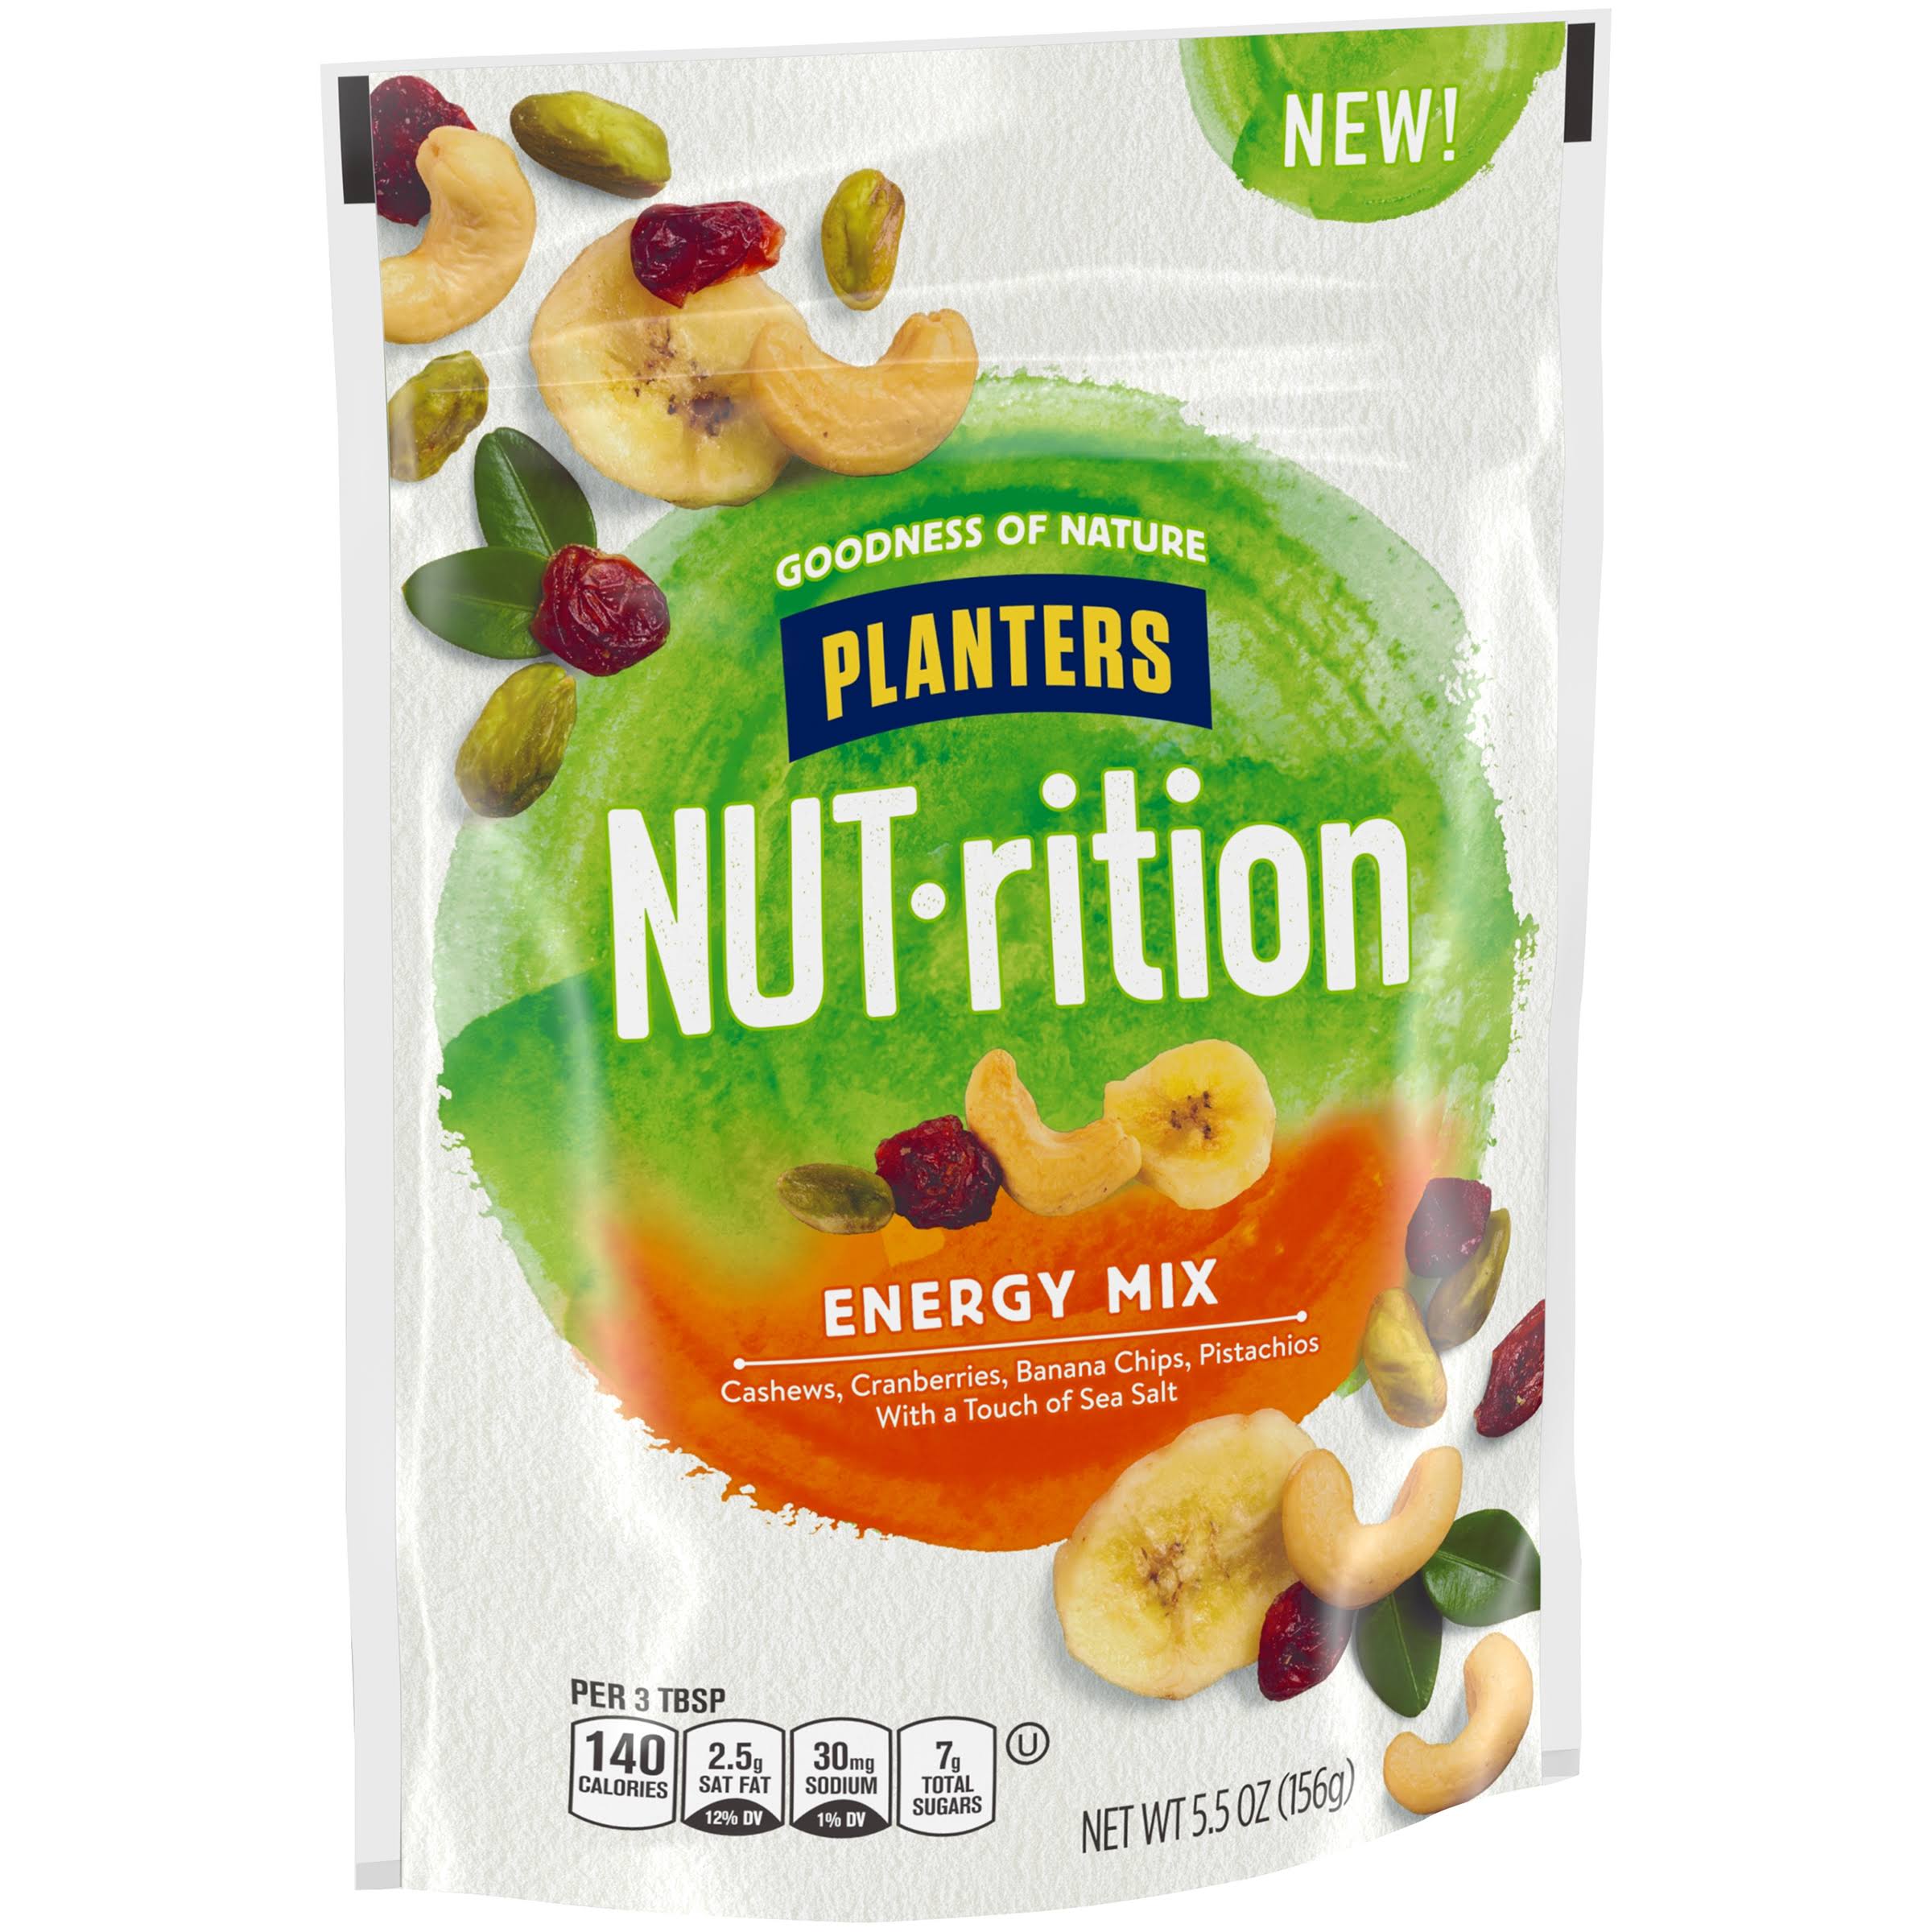 Planters NUT-rition Energy Mix Bag - 156g